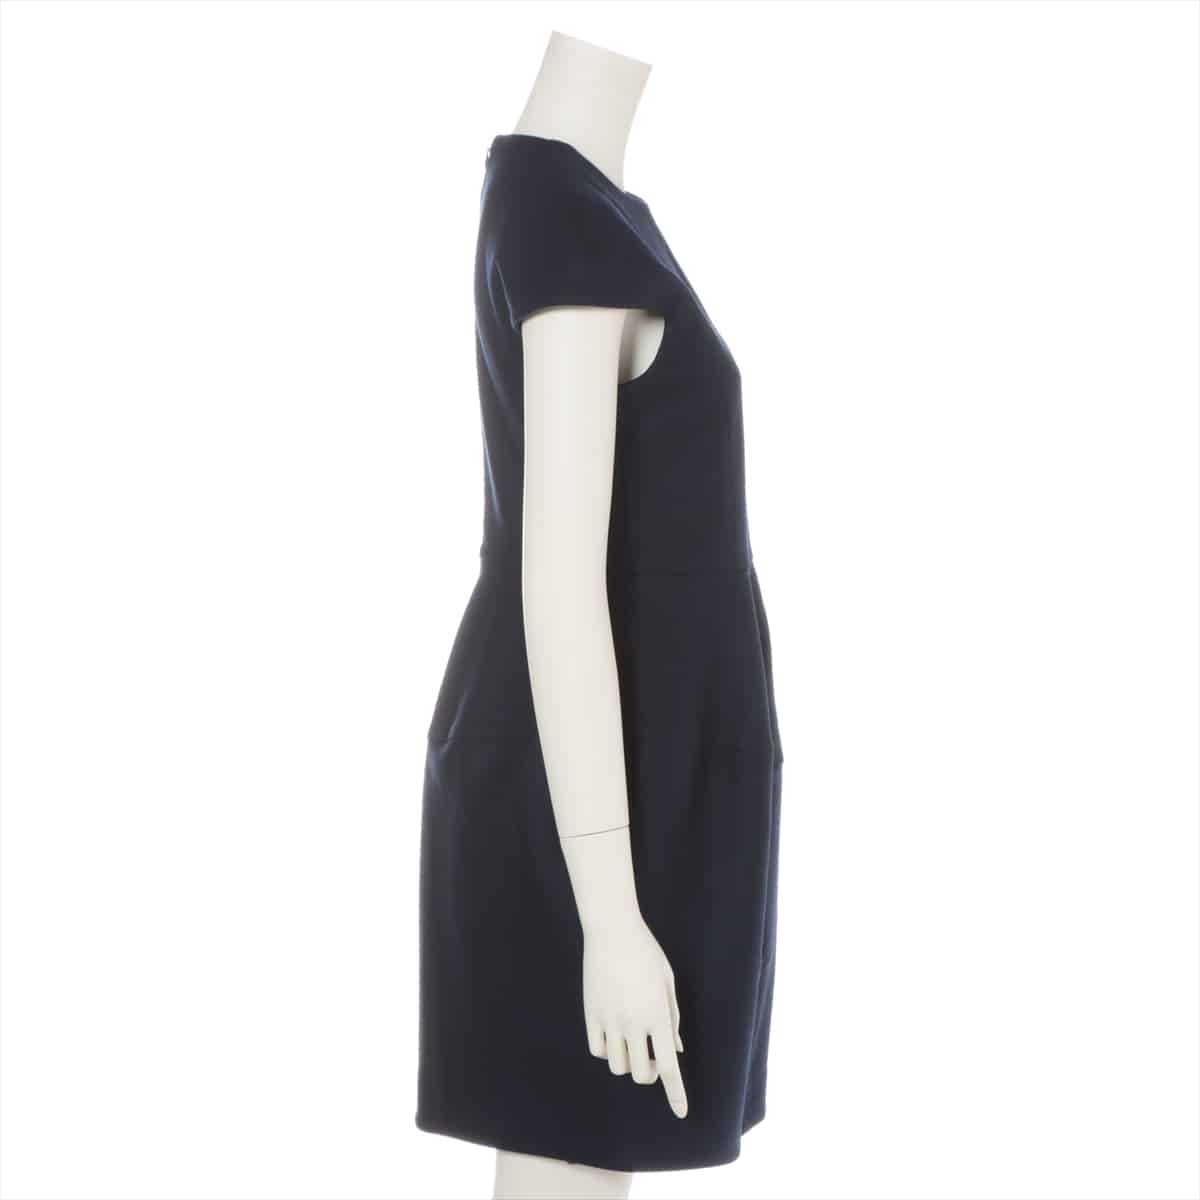 YOKO CHAN Wool & nylon Dress Ladies' Navy blue